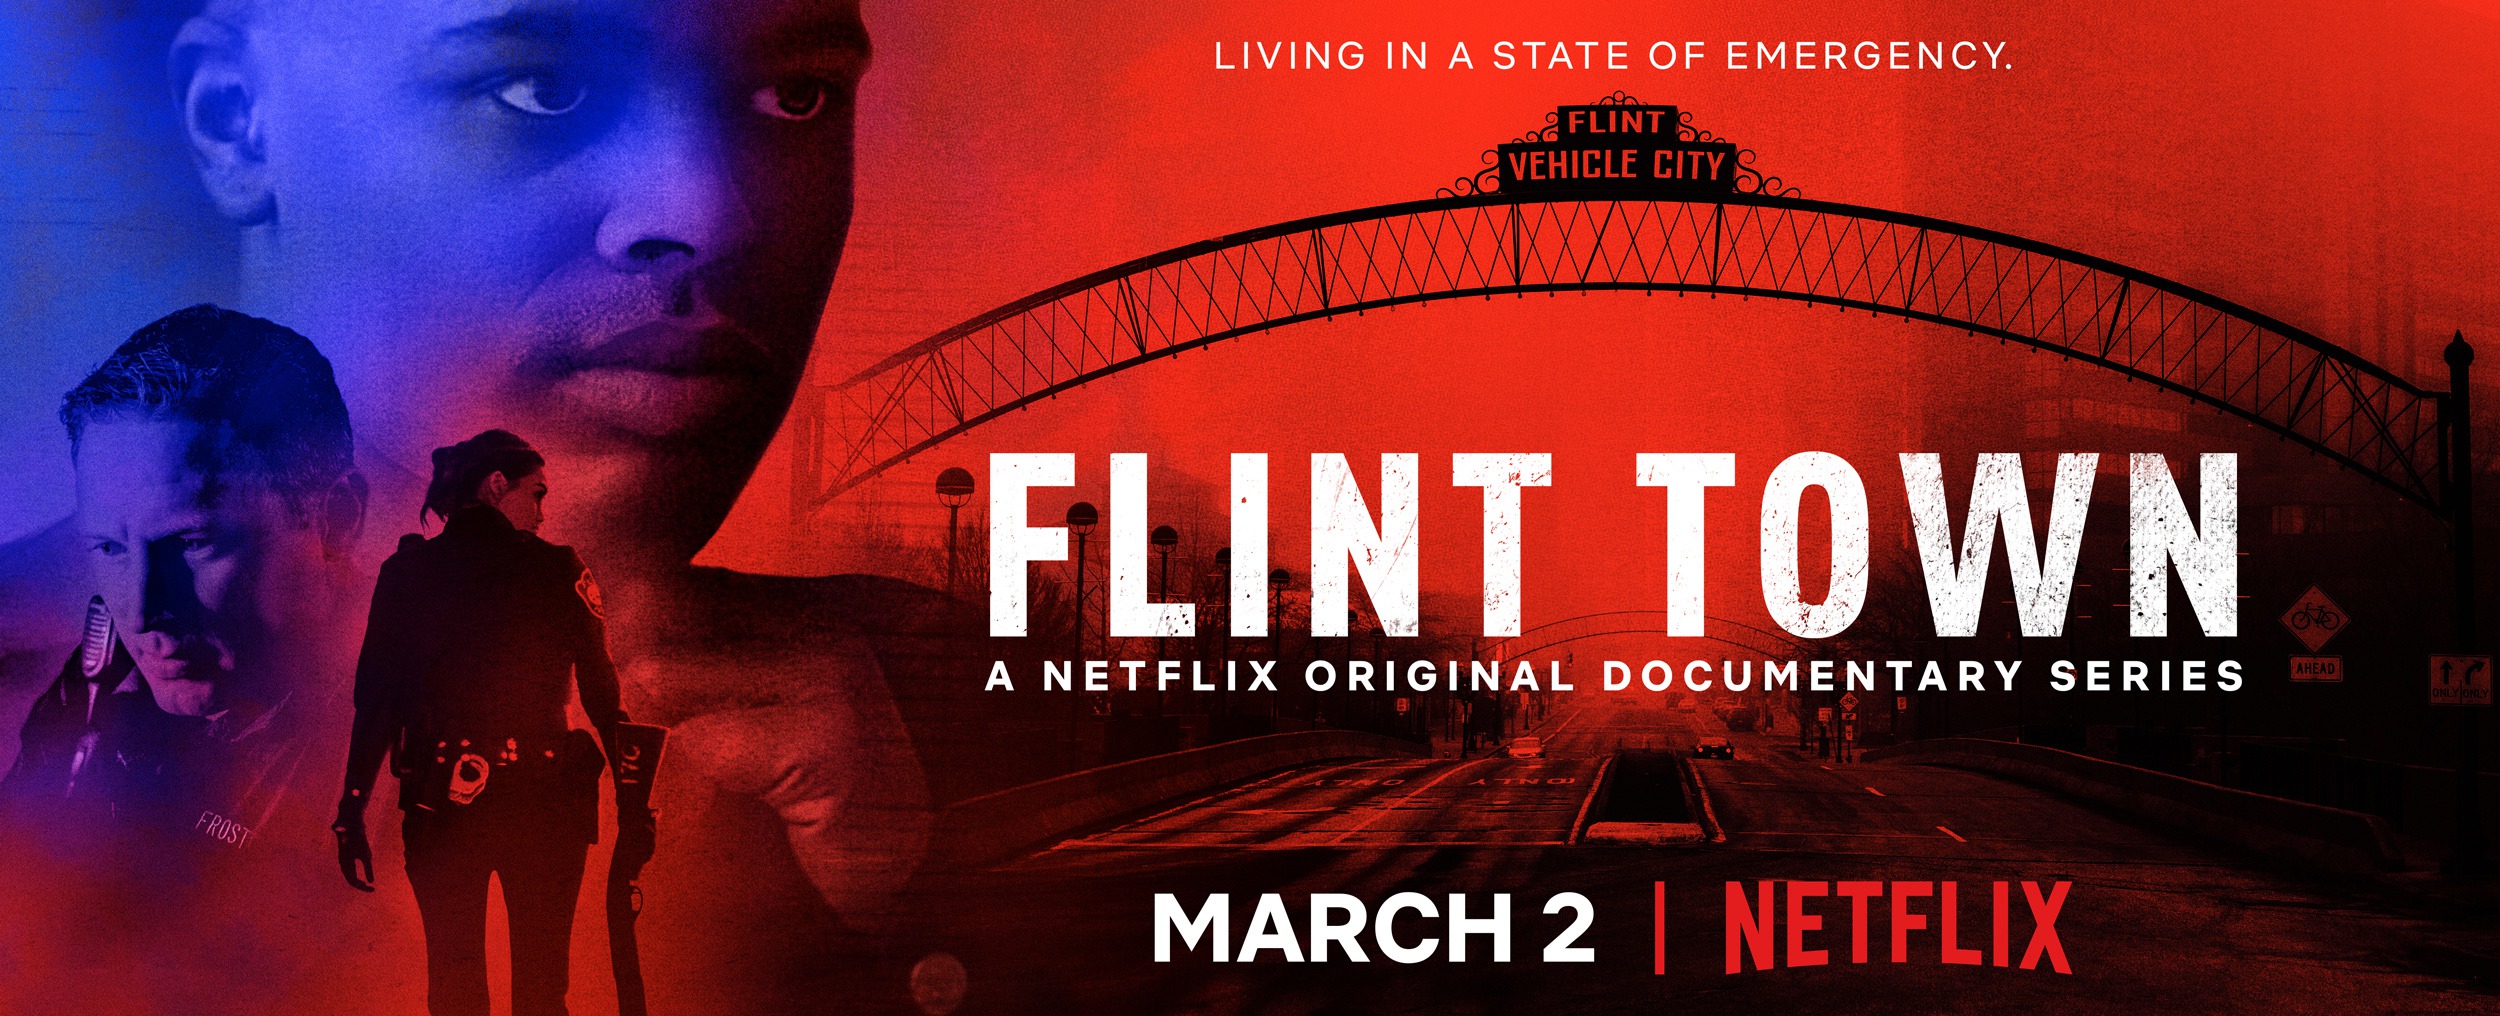 Mega Sized TV Poster Image for Flint Town (#2 of 2)